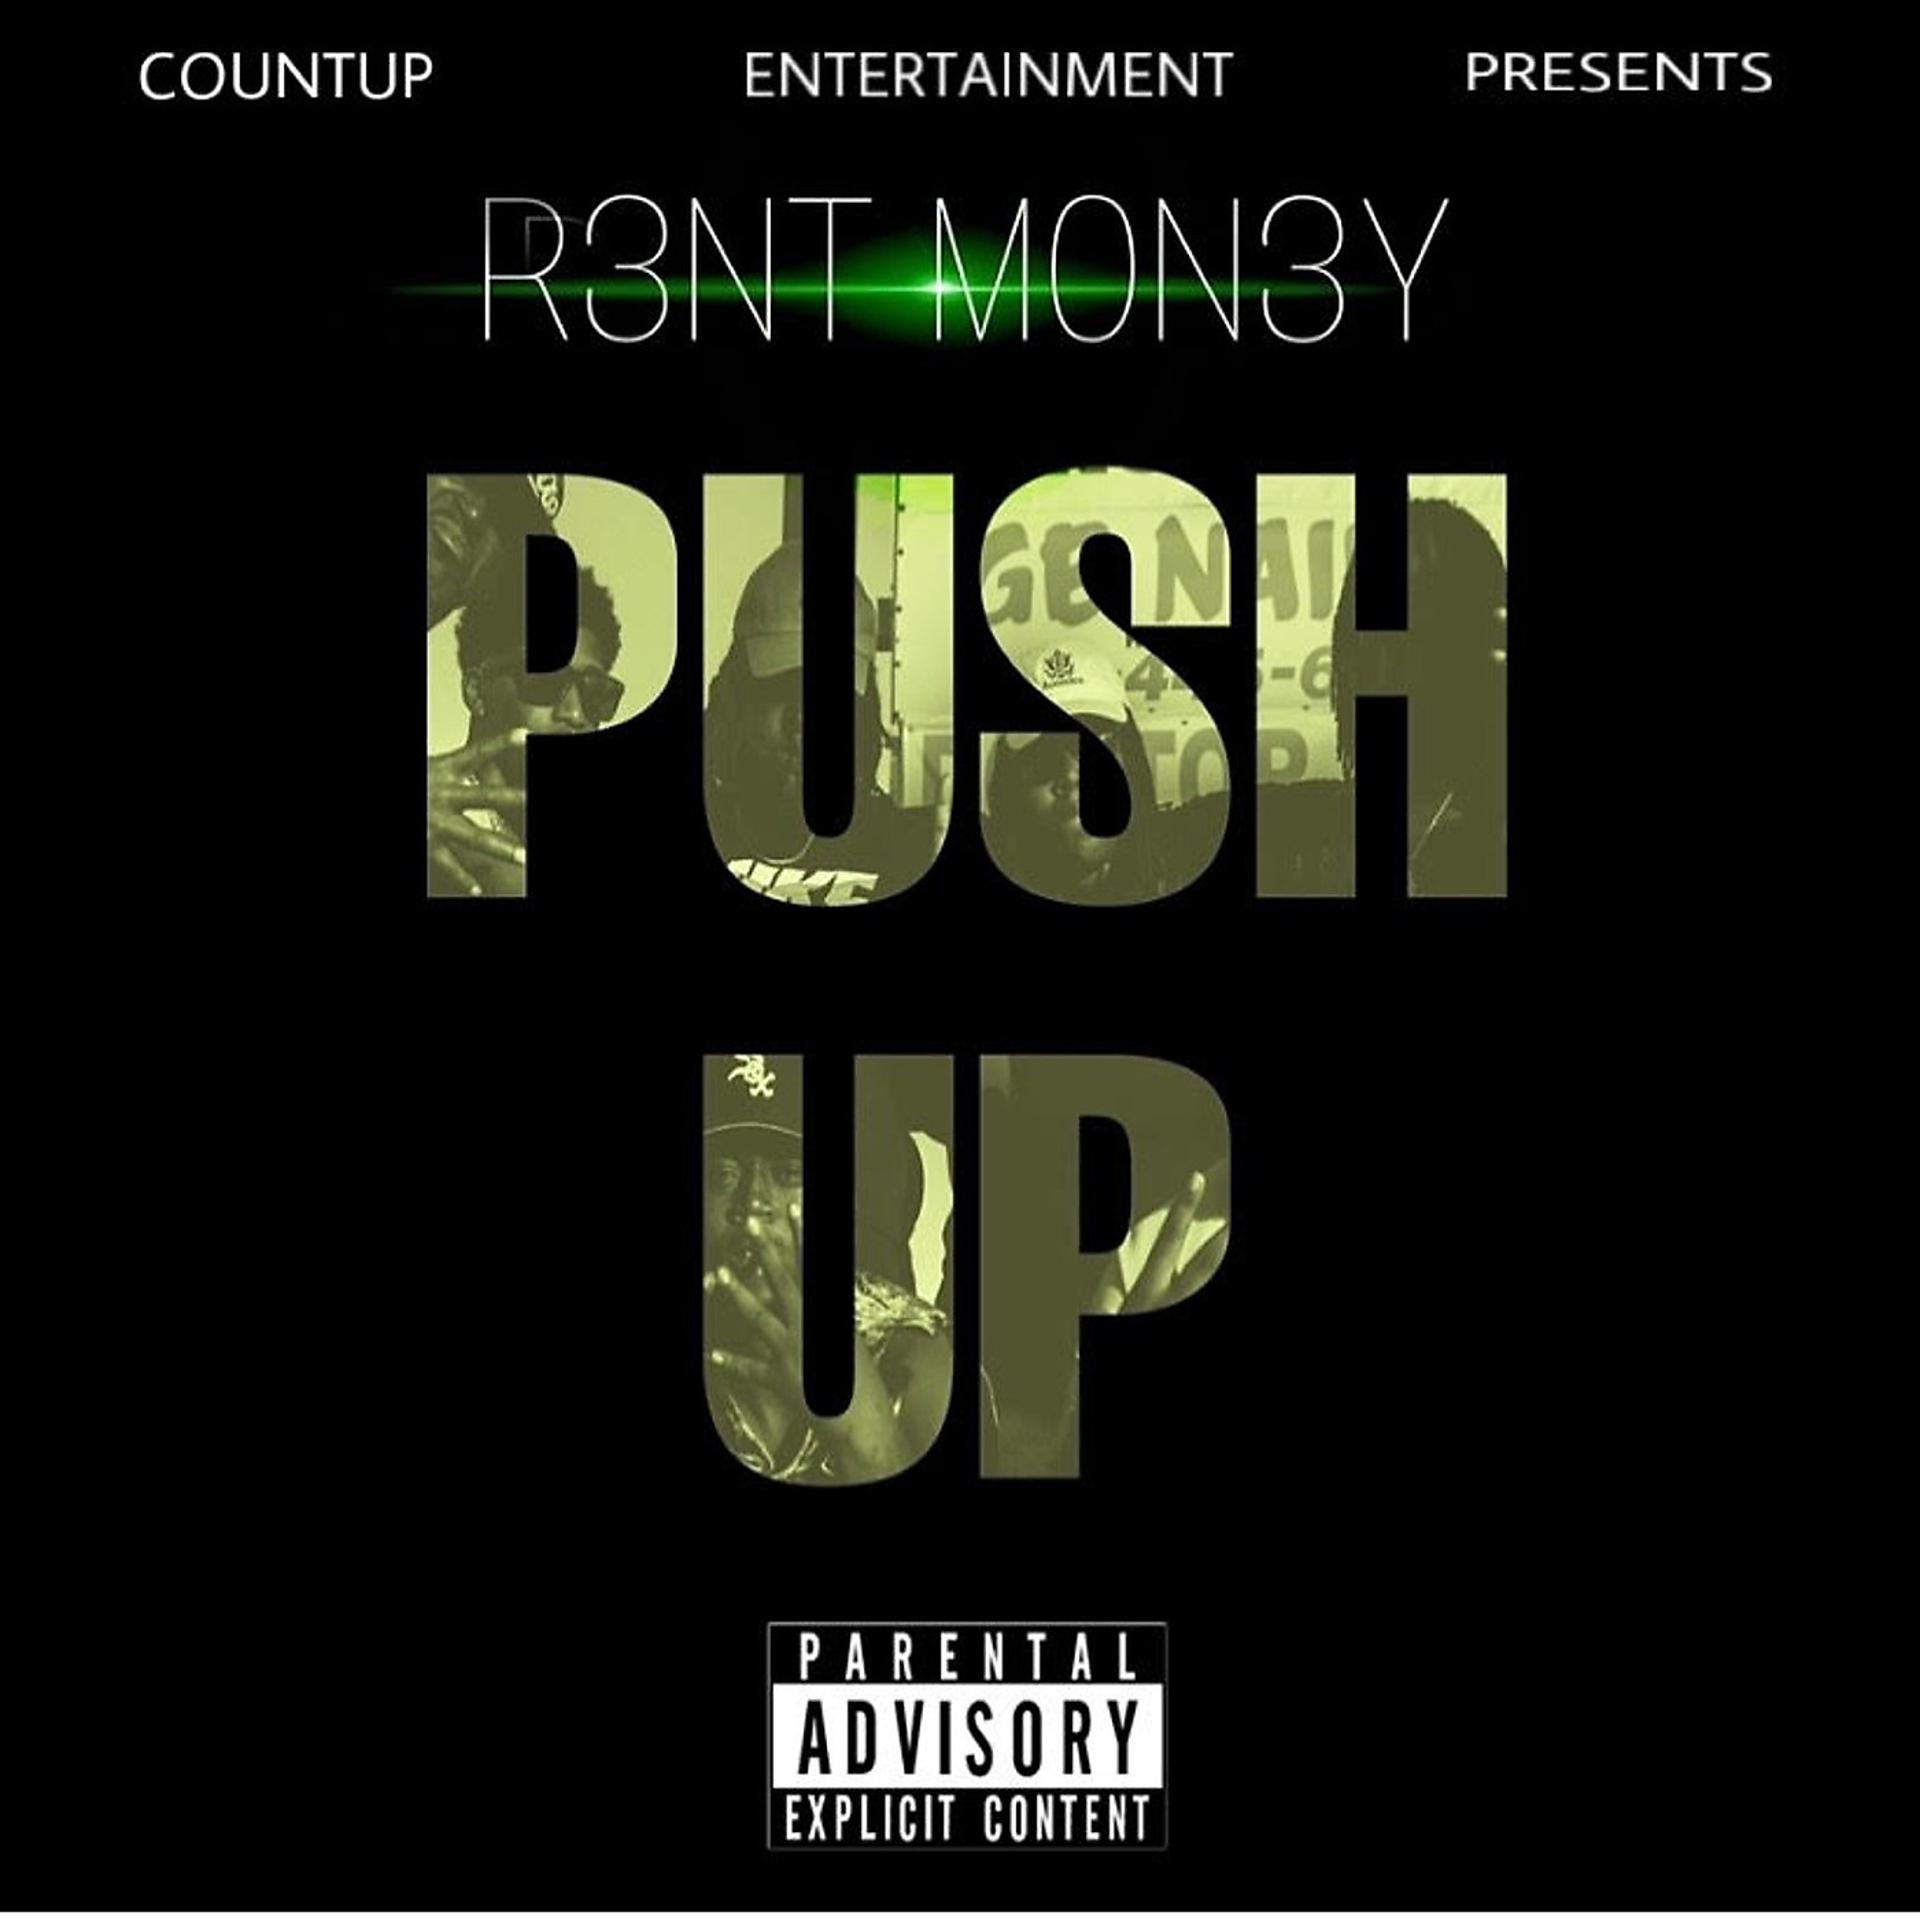 Постер альбома Push Up